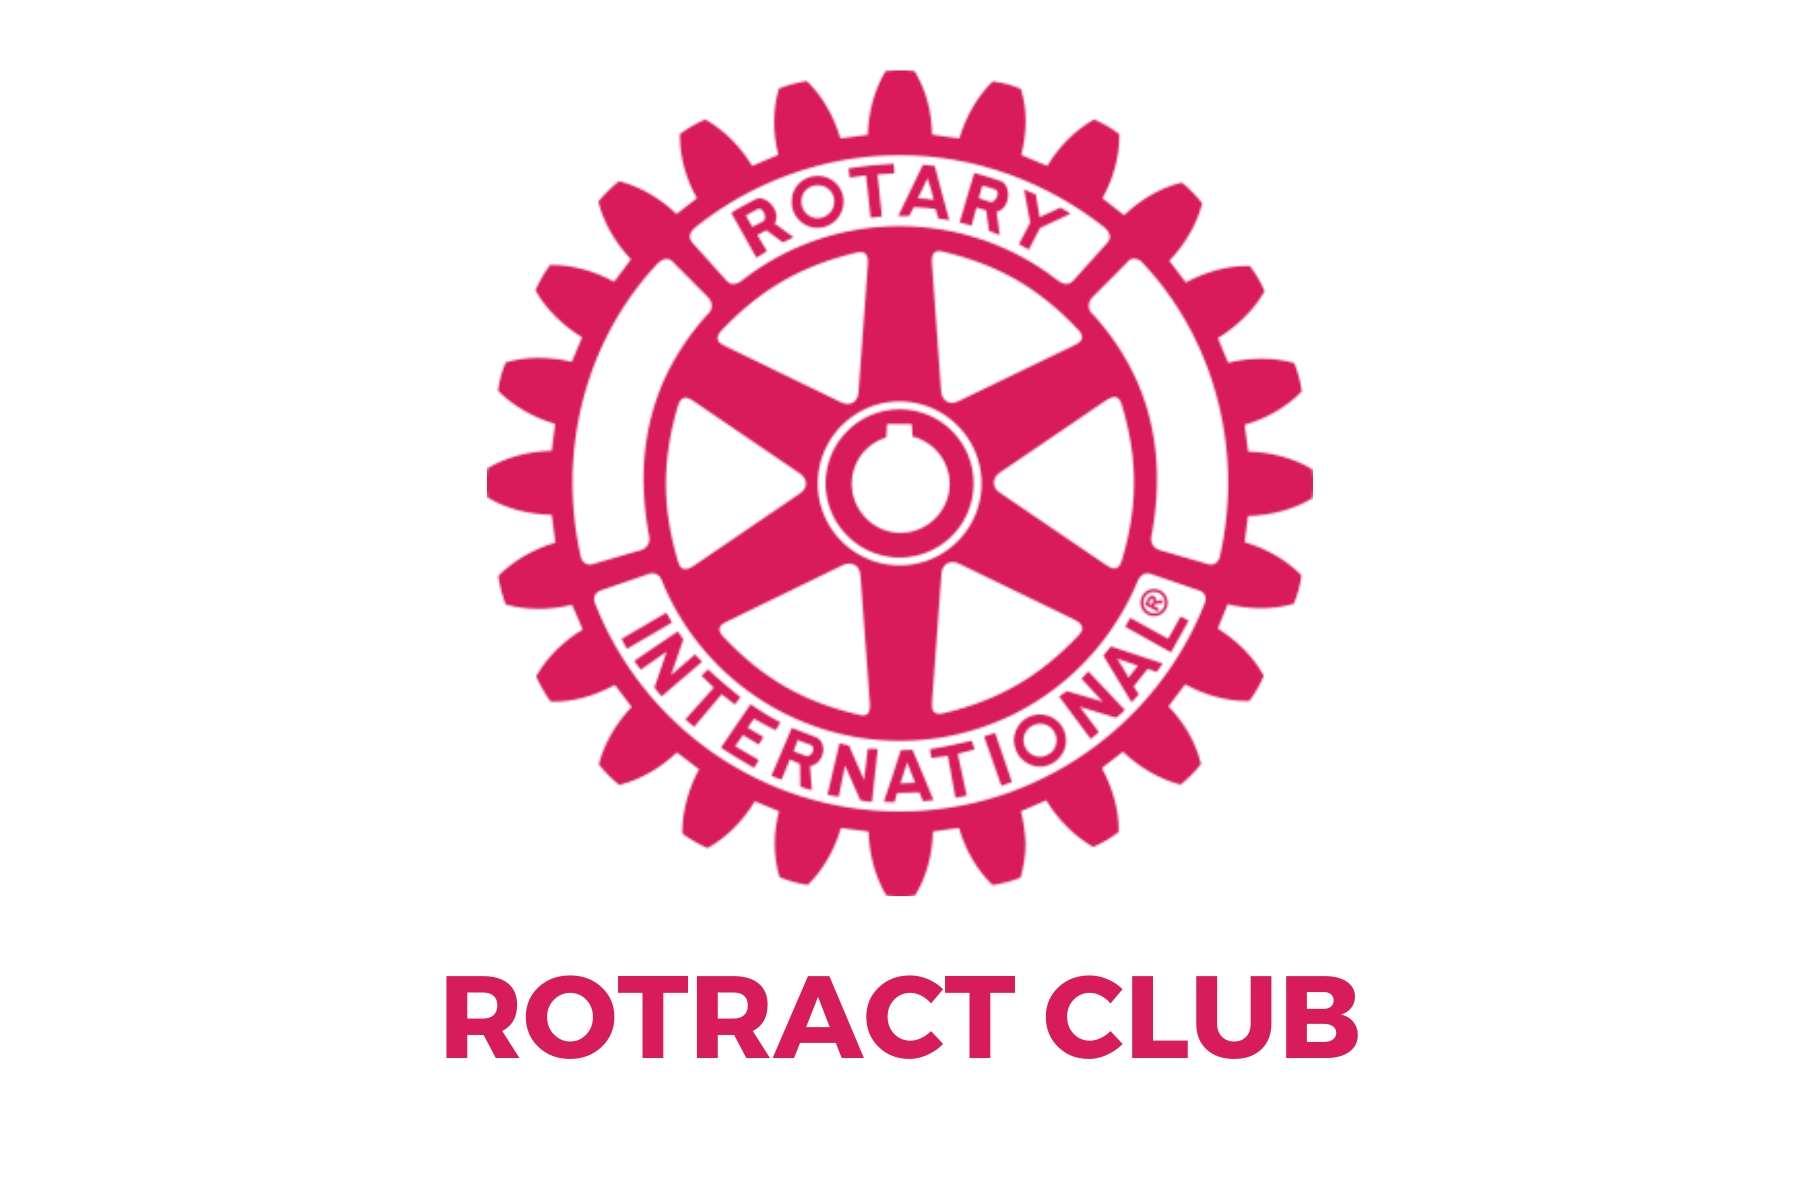 Rotract club